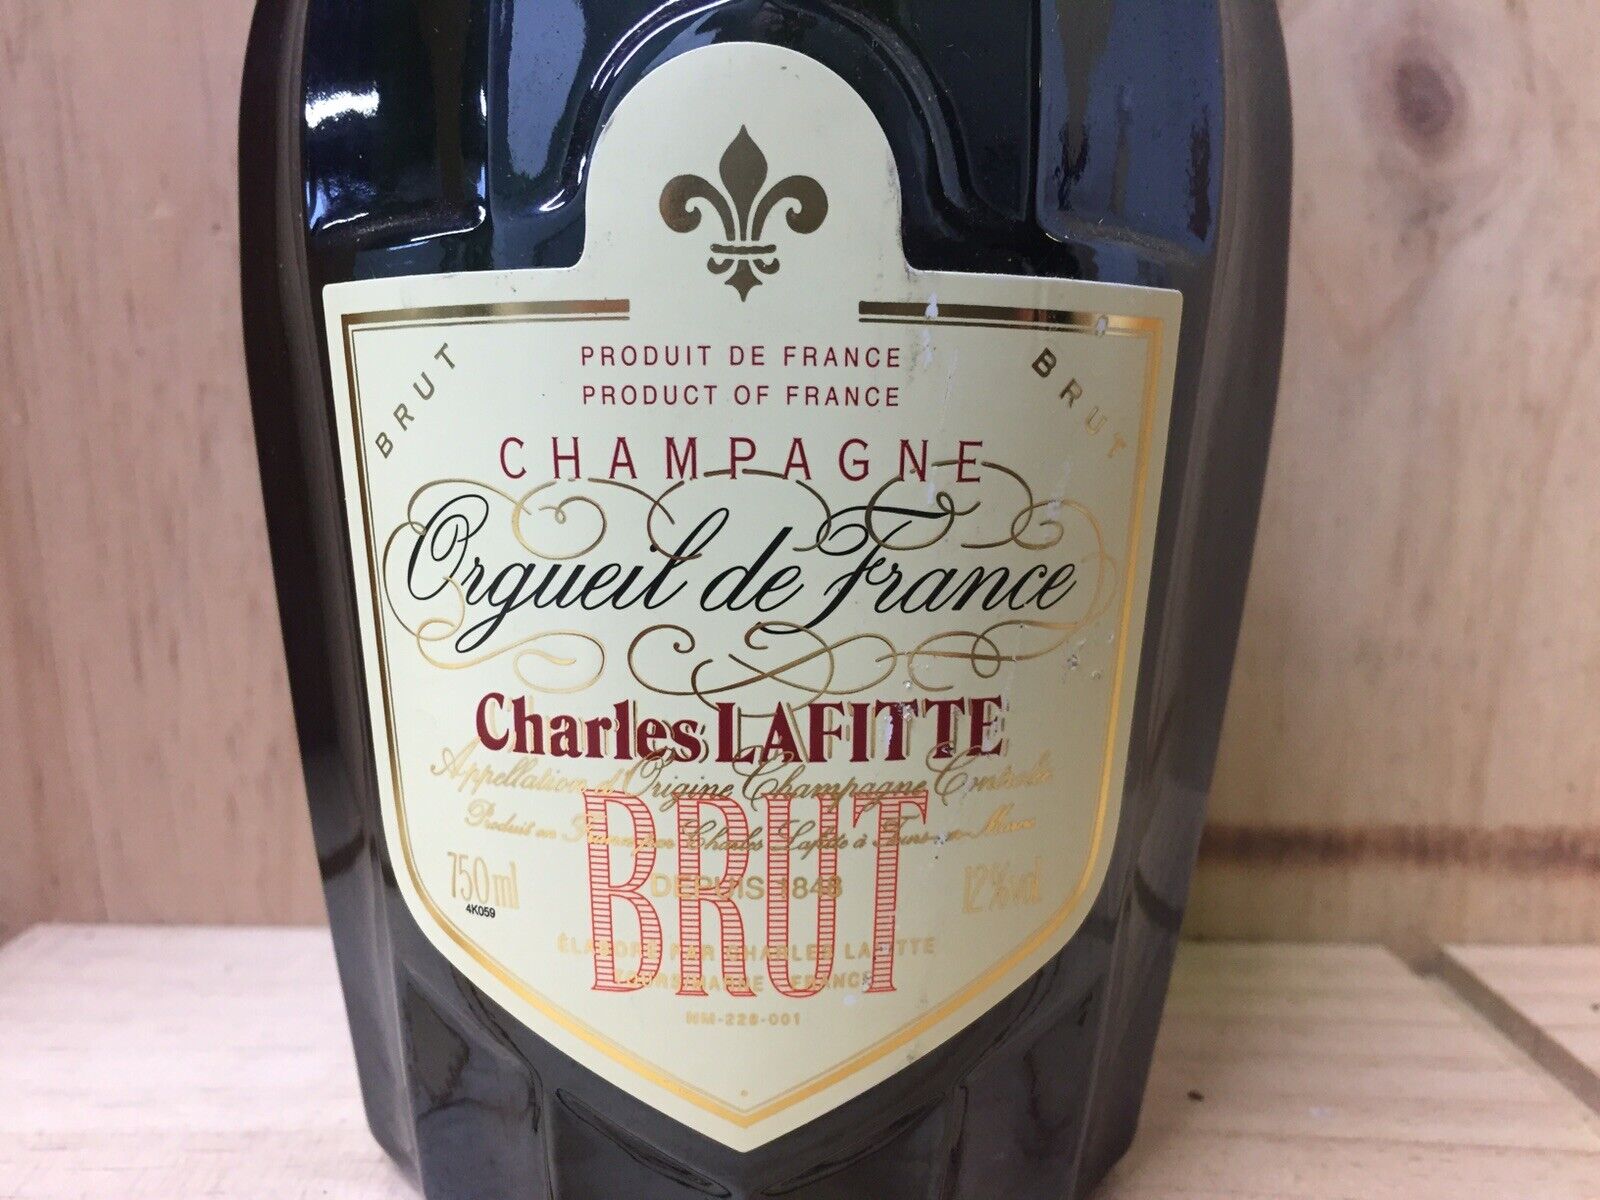 Botol sampanye Charles Lafitte